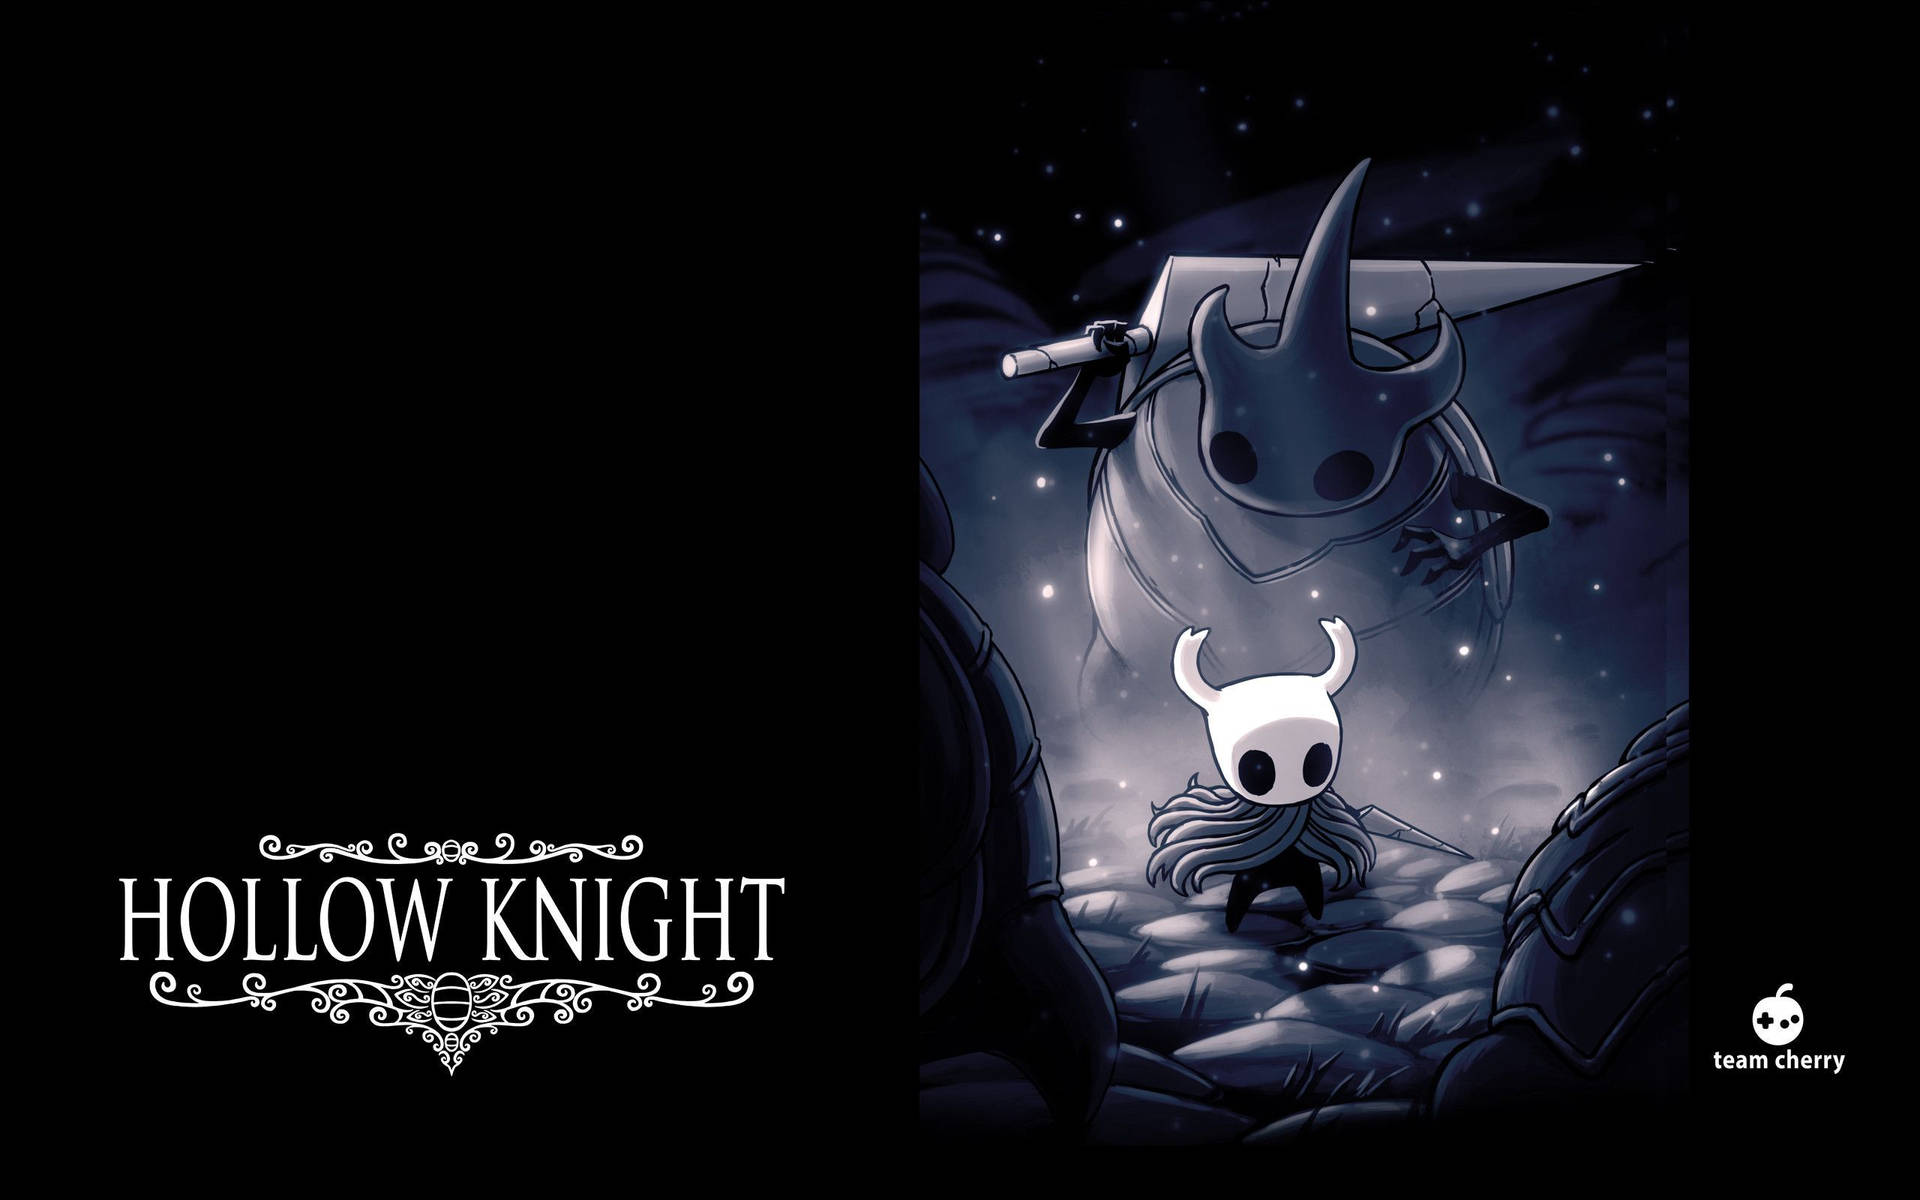 Free Hollow Knight Wallpaper Downloads, Hollow Knight Wallpaper for FREE